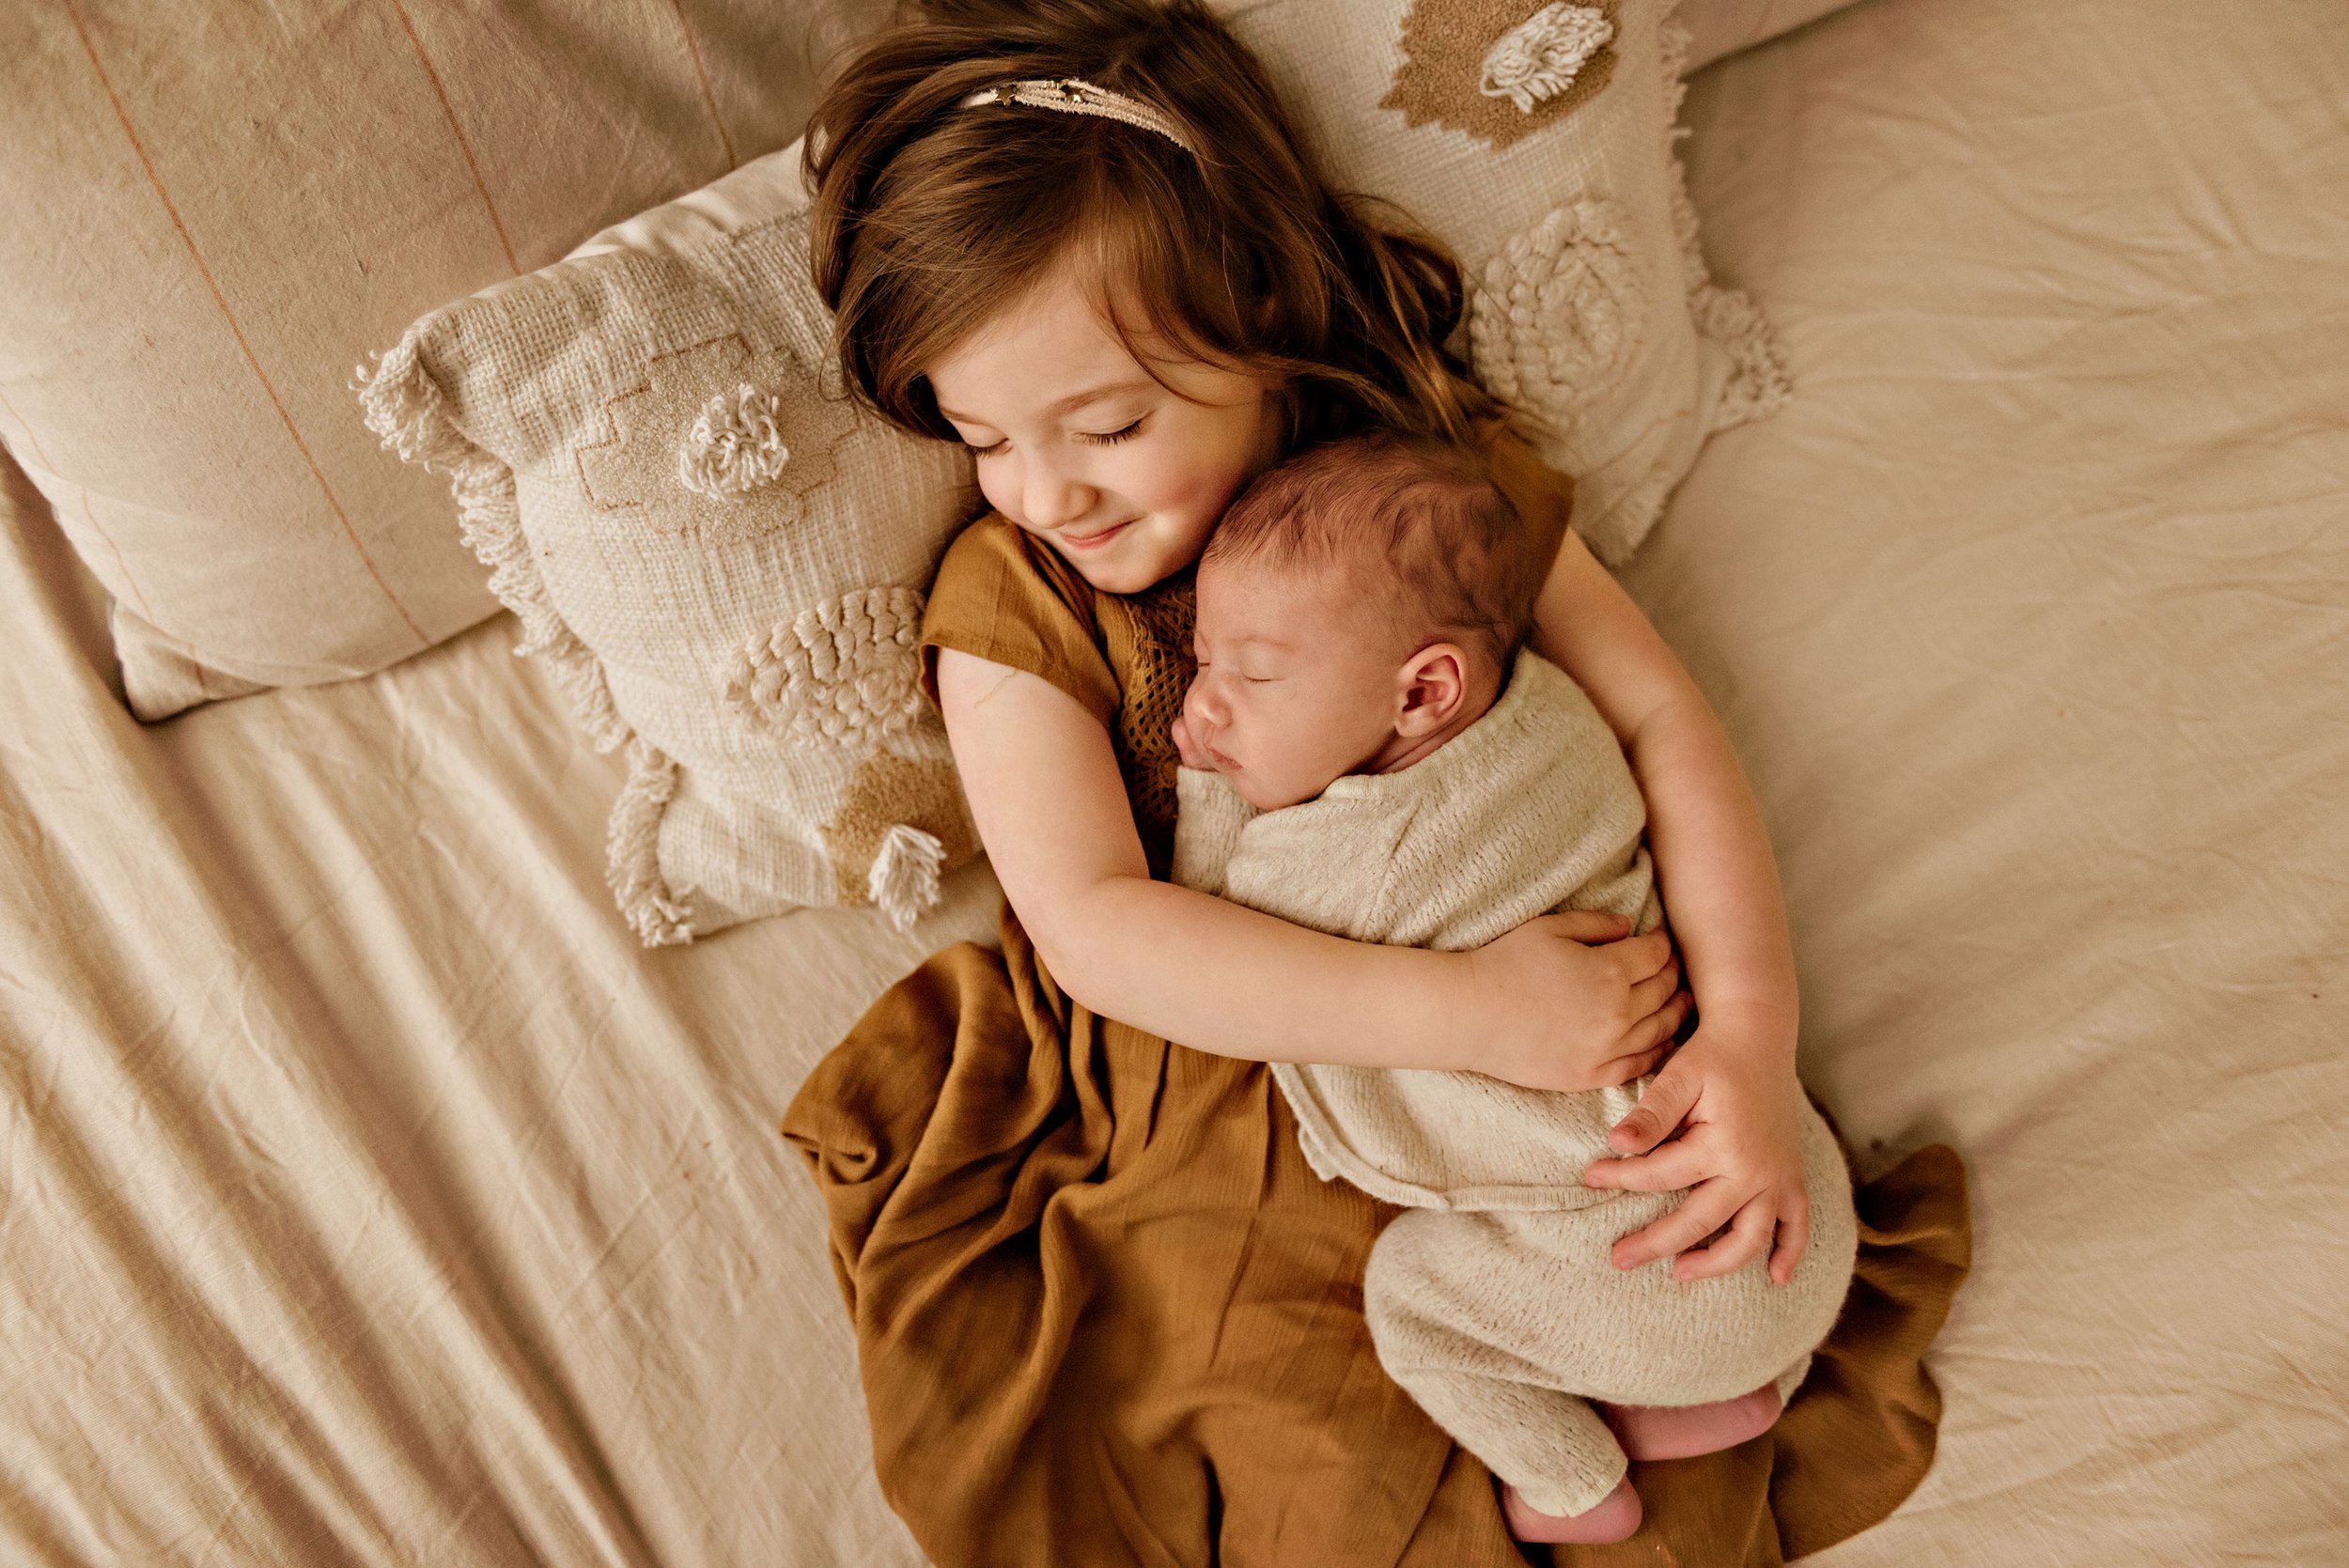 cleveland-ohio-newborn-photographer-lauren-grayson-studio-baby-family-photo-session36.jpg